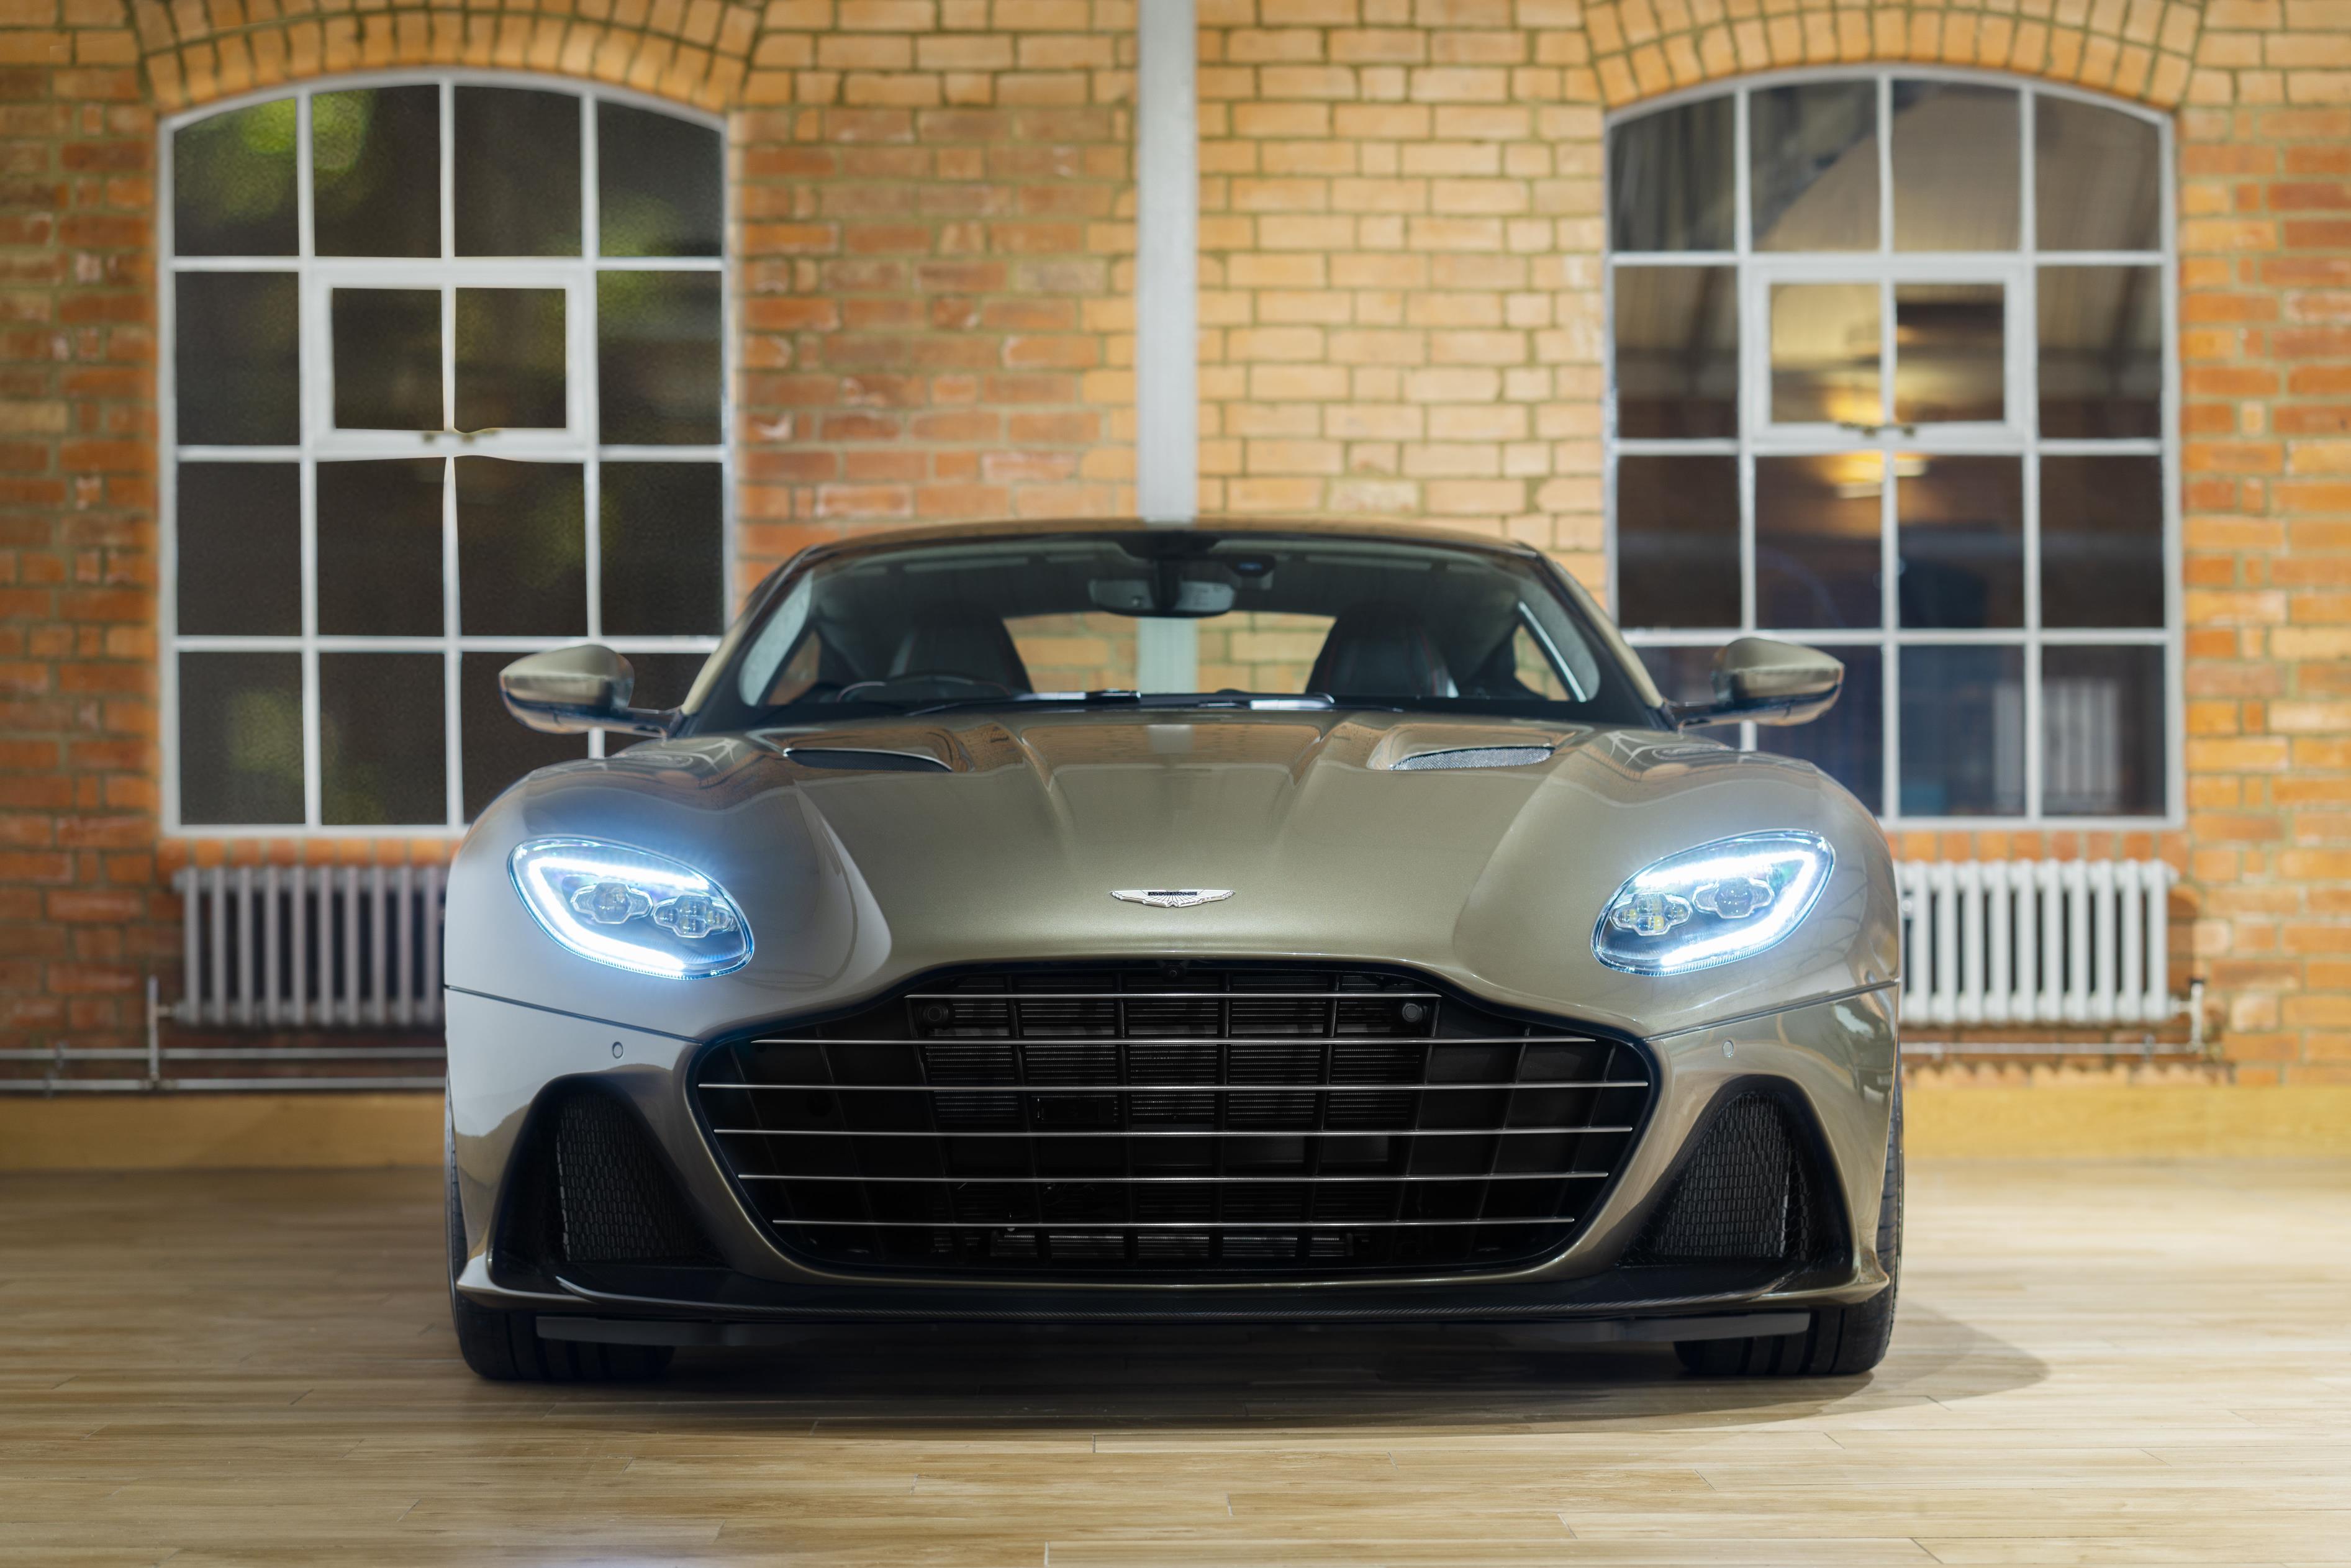 Aston Martin DBS Superleggera Front View